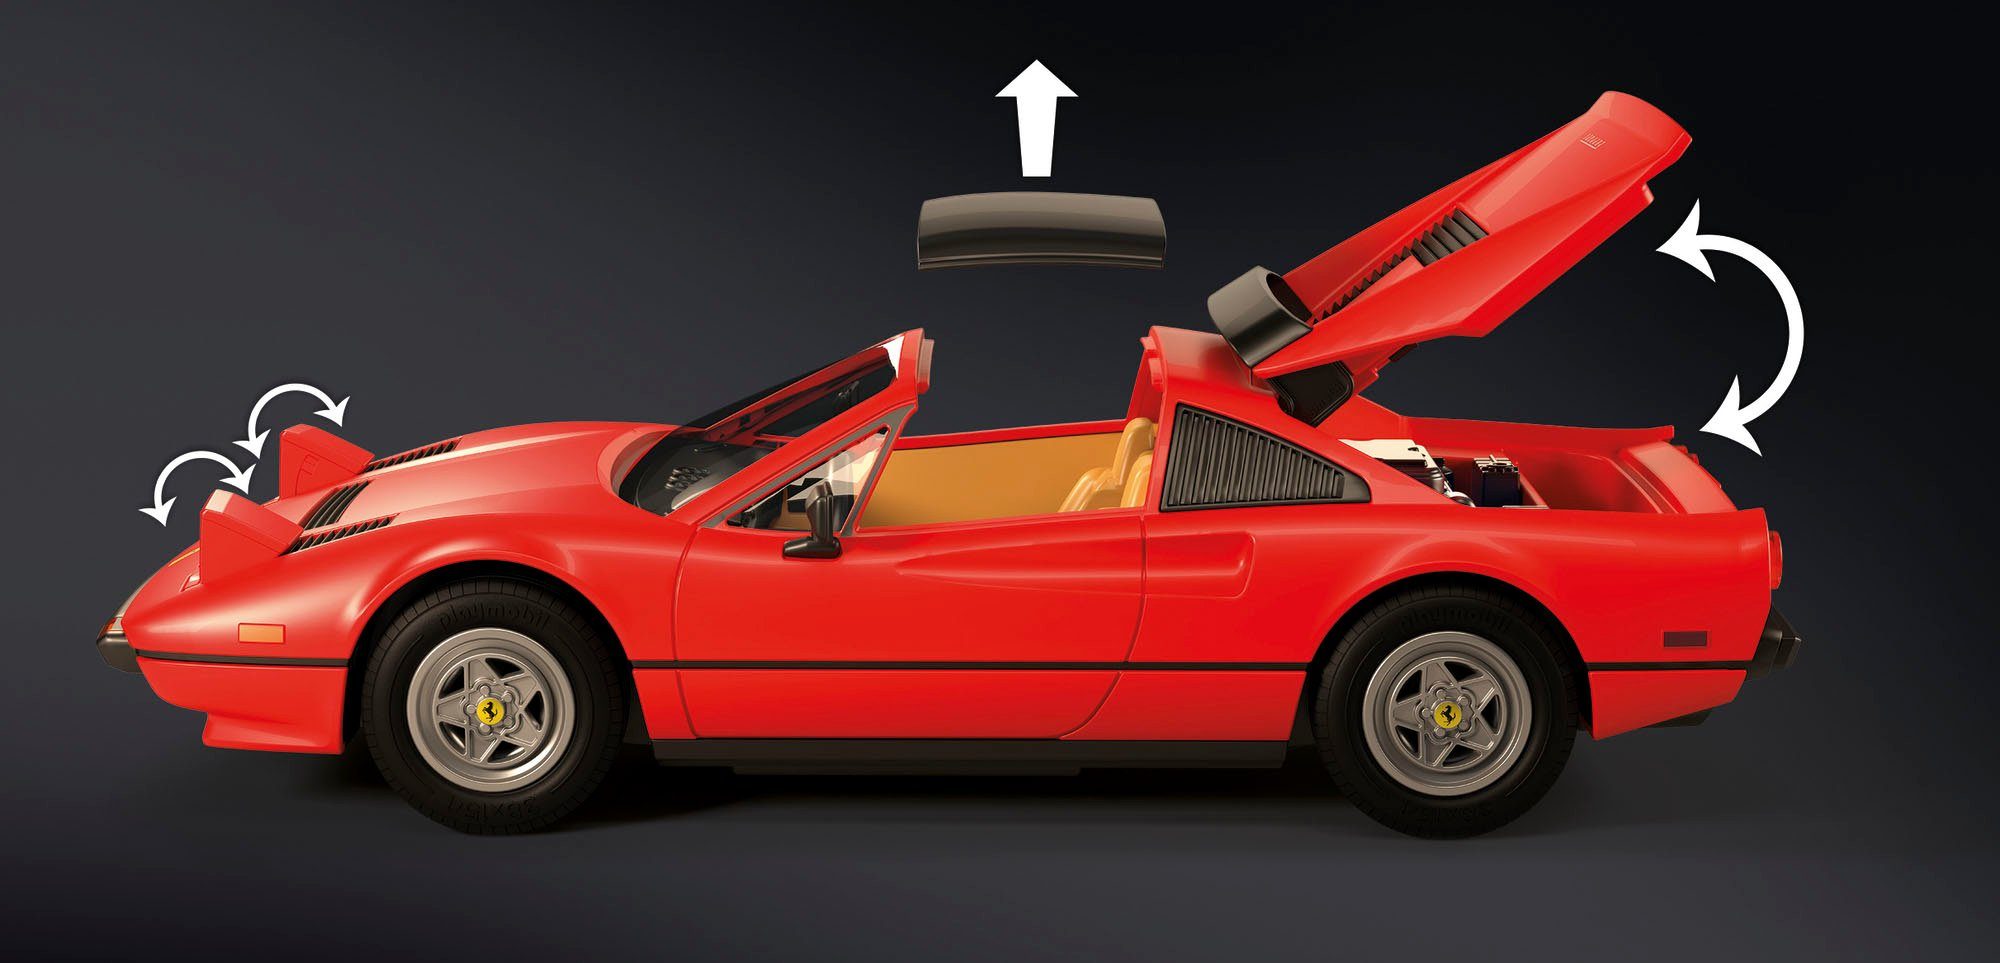 Konstruktions-Spielset Ferrari St), Made (71343), p.i. (48 Playmobil® in GTS 308 Germany Magnum, Quattrovalvole